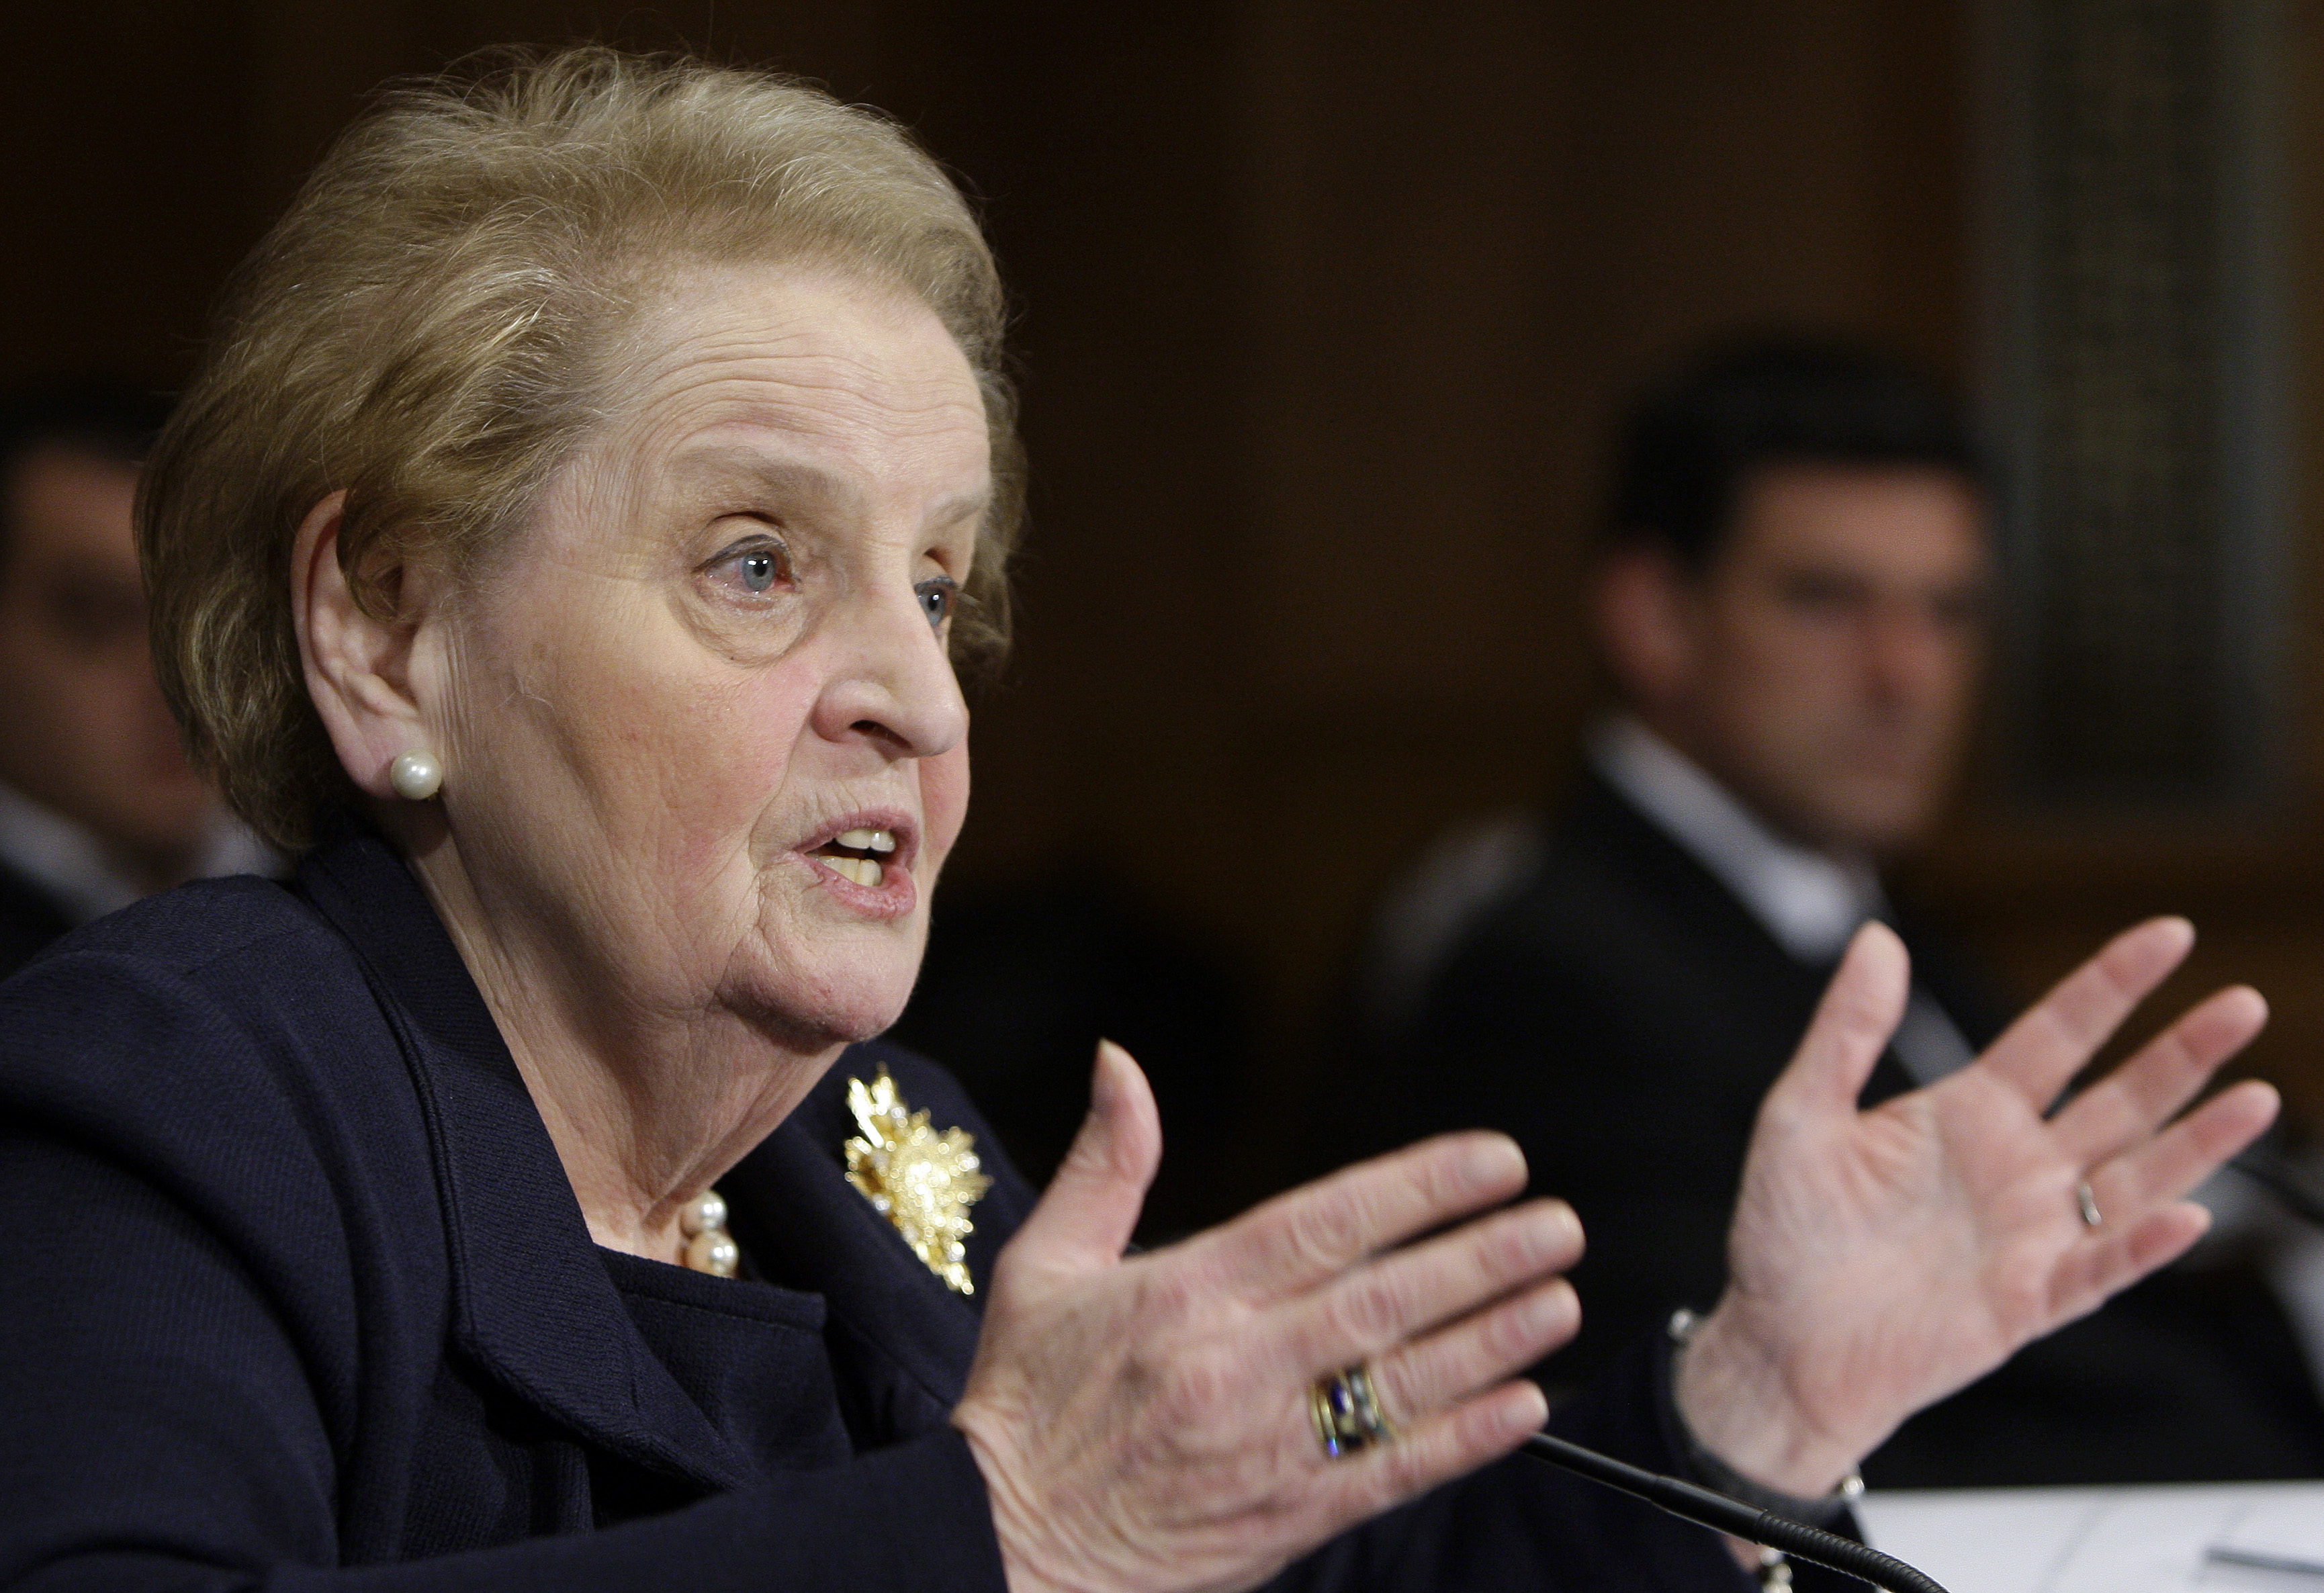 Madeleine Albright, first female U.S. secretary of state, has died